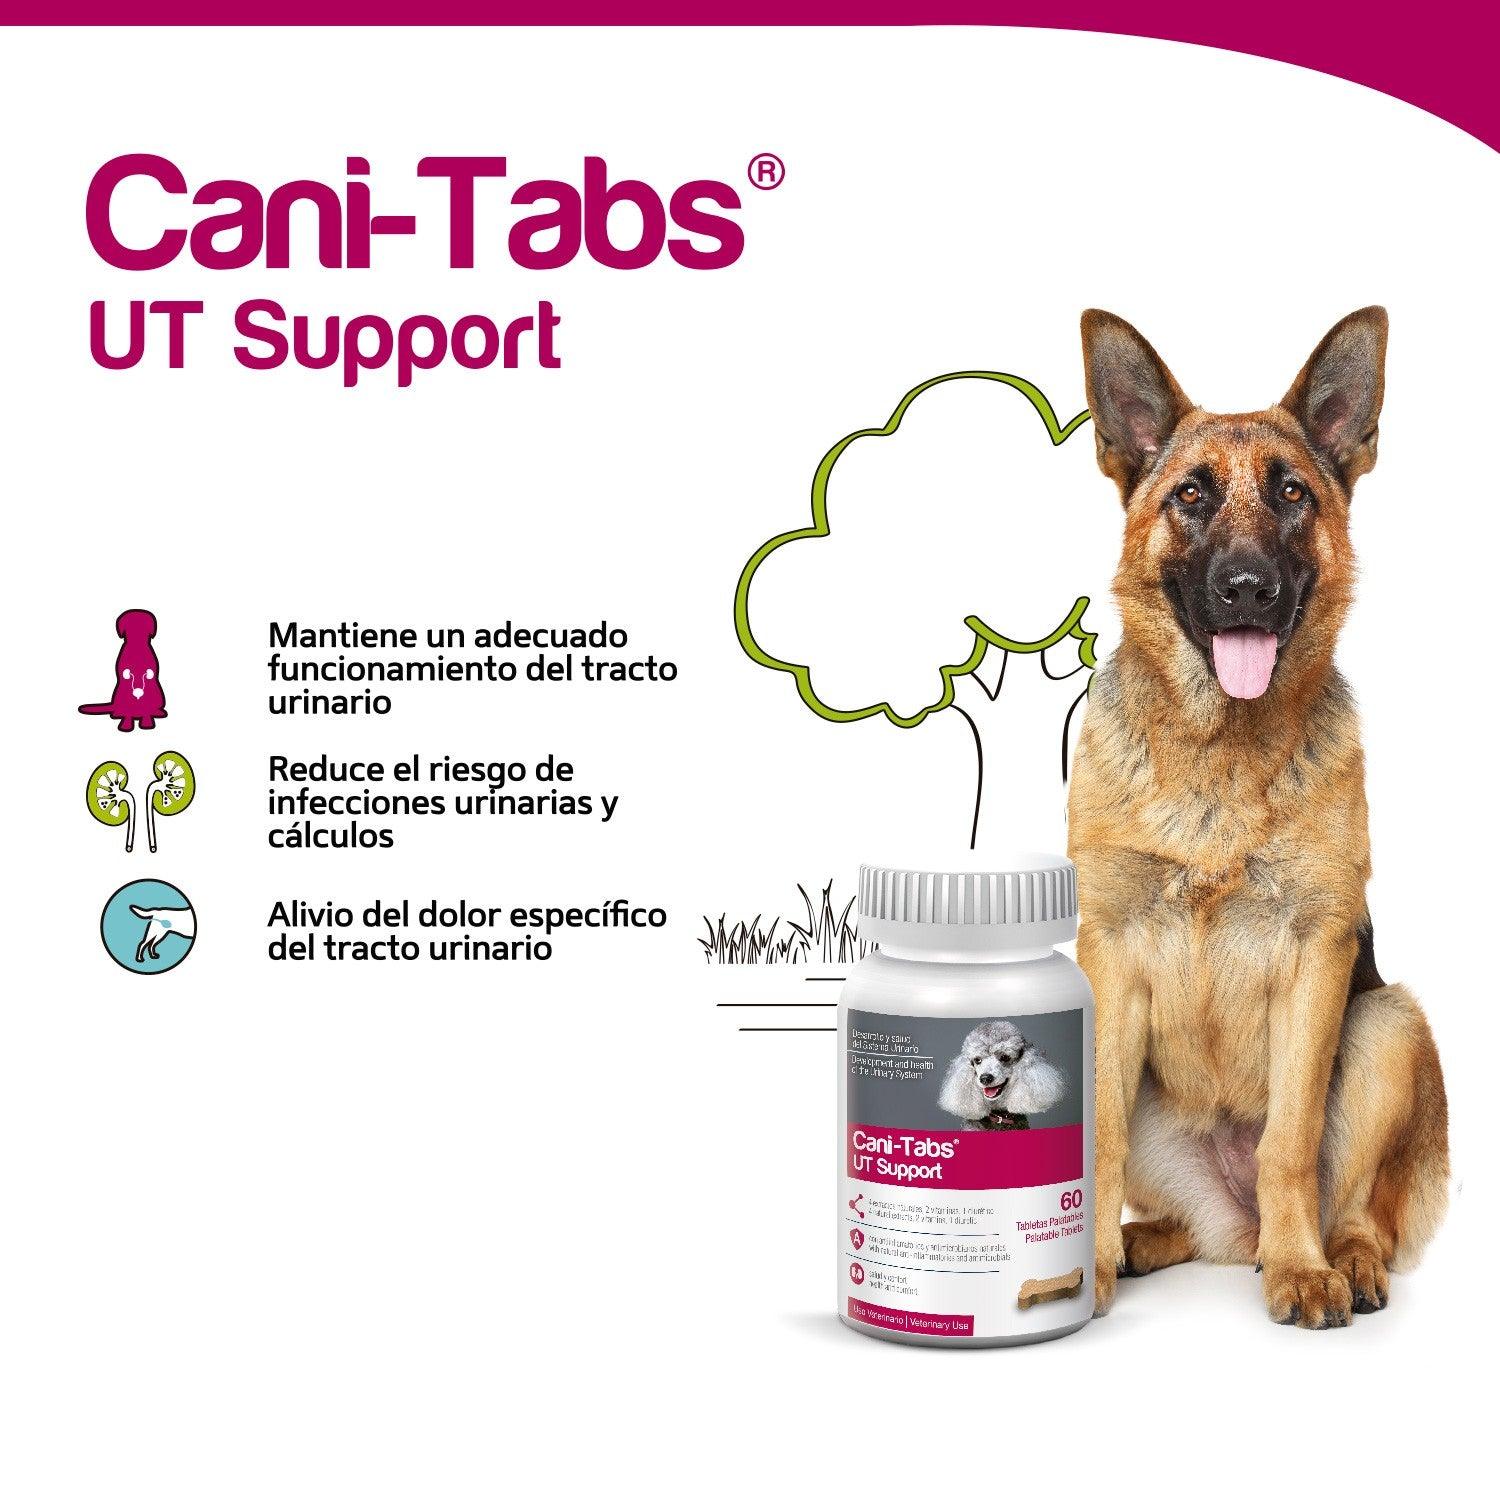 Cani-tabs UT Support frasco de 60 tabletas - AvicMartin Farmacia Veterinaria 